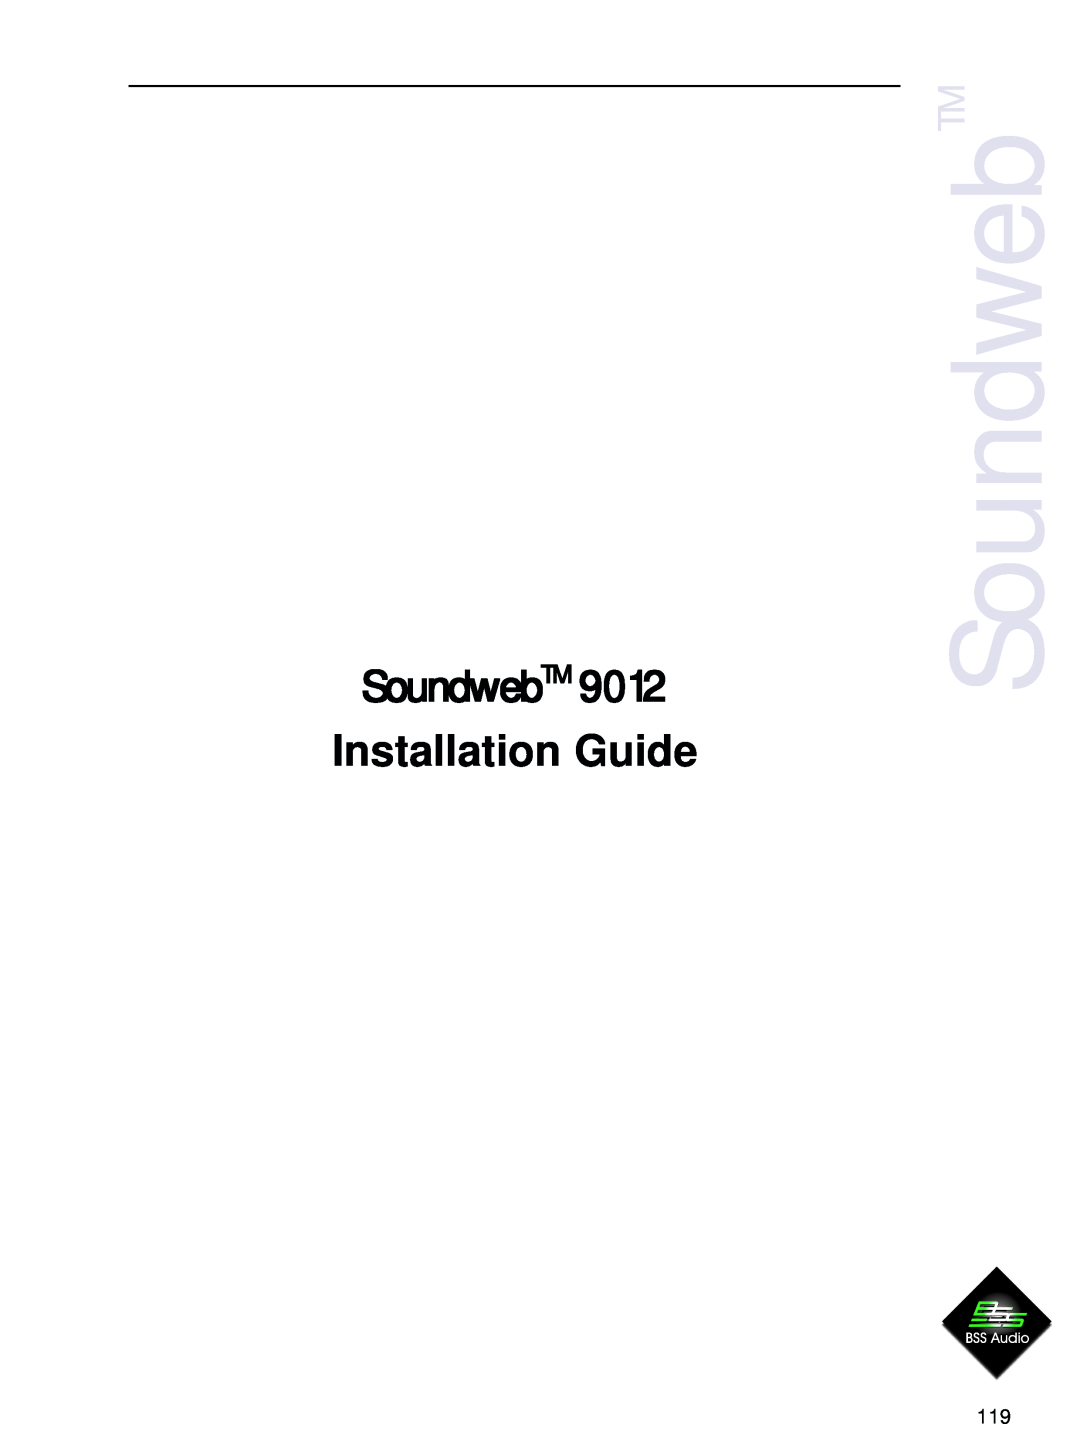 BSS Audio 9012 manual SoundwebTM, Installation Guide 